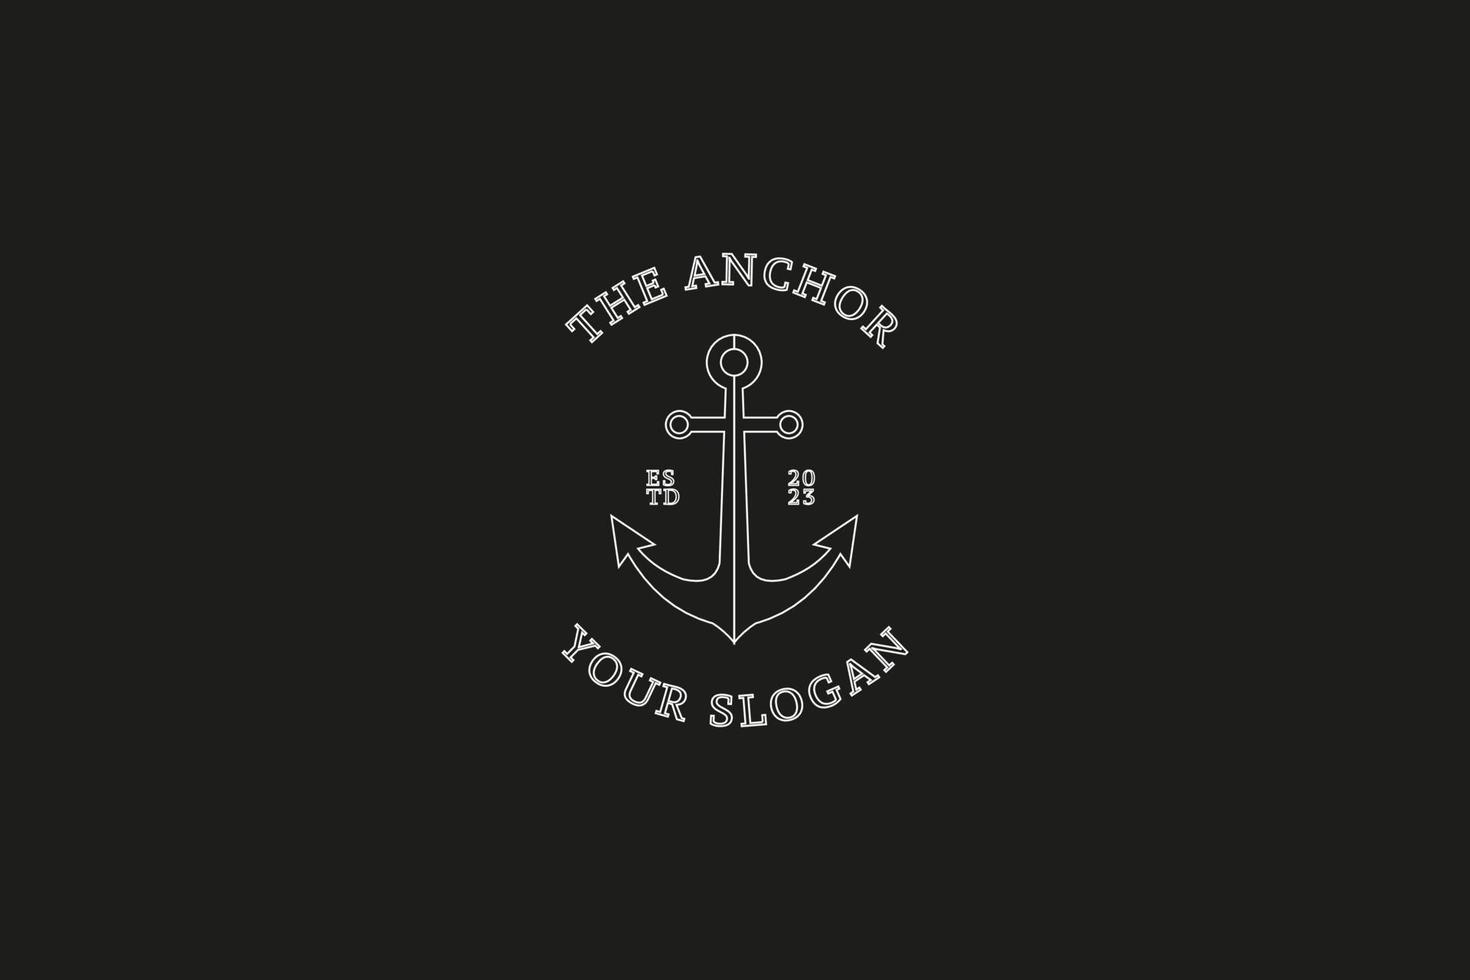 marinier retro emblemen logo met anker, anker logo - vector